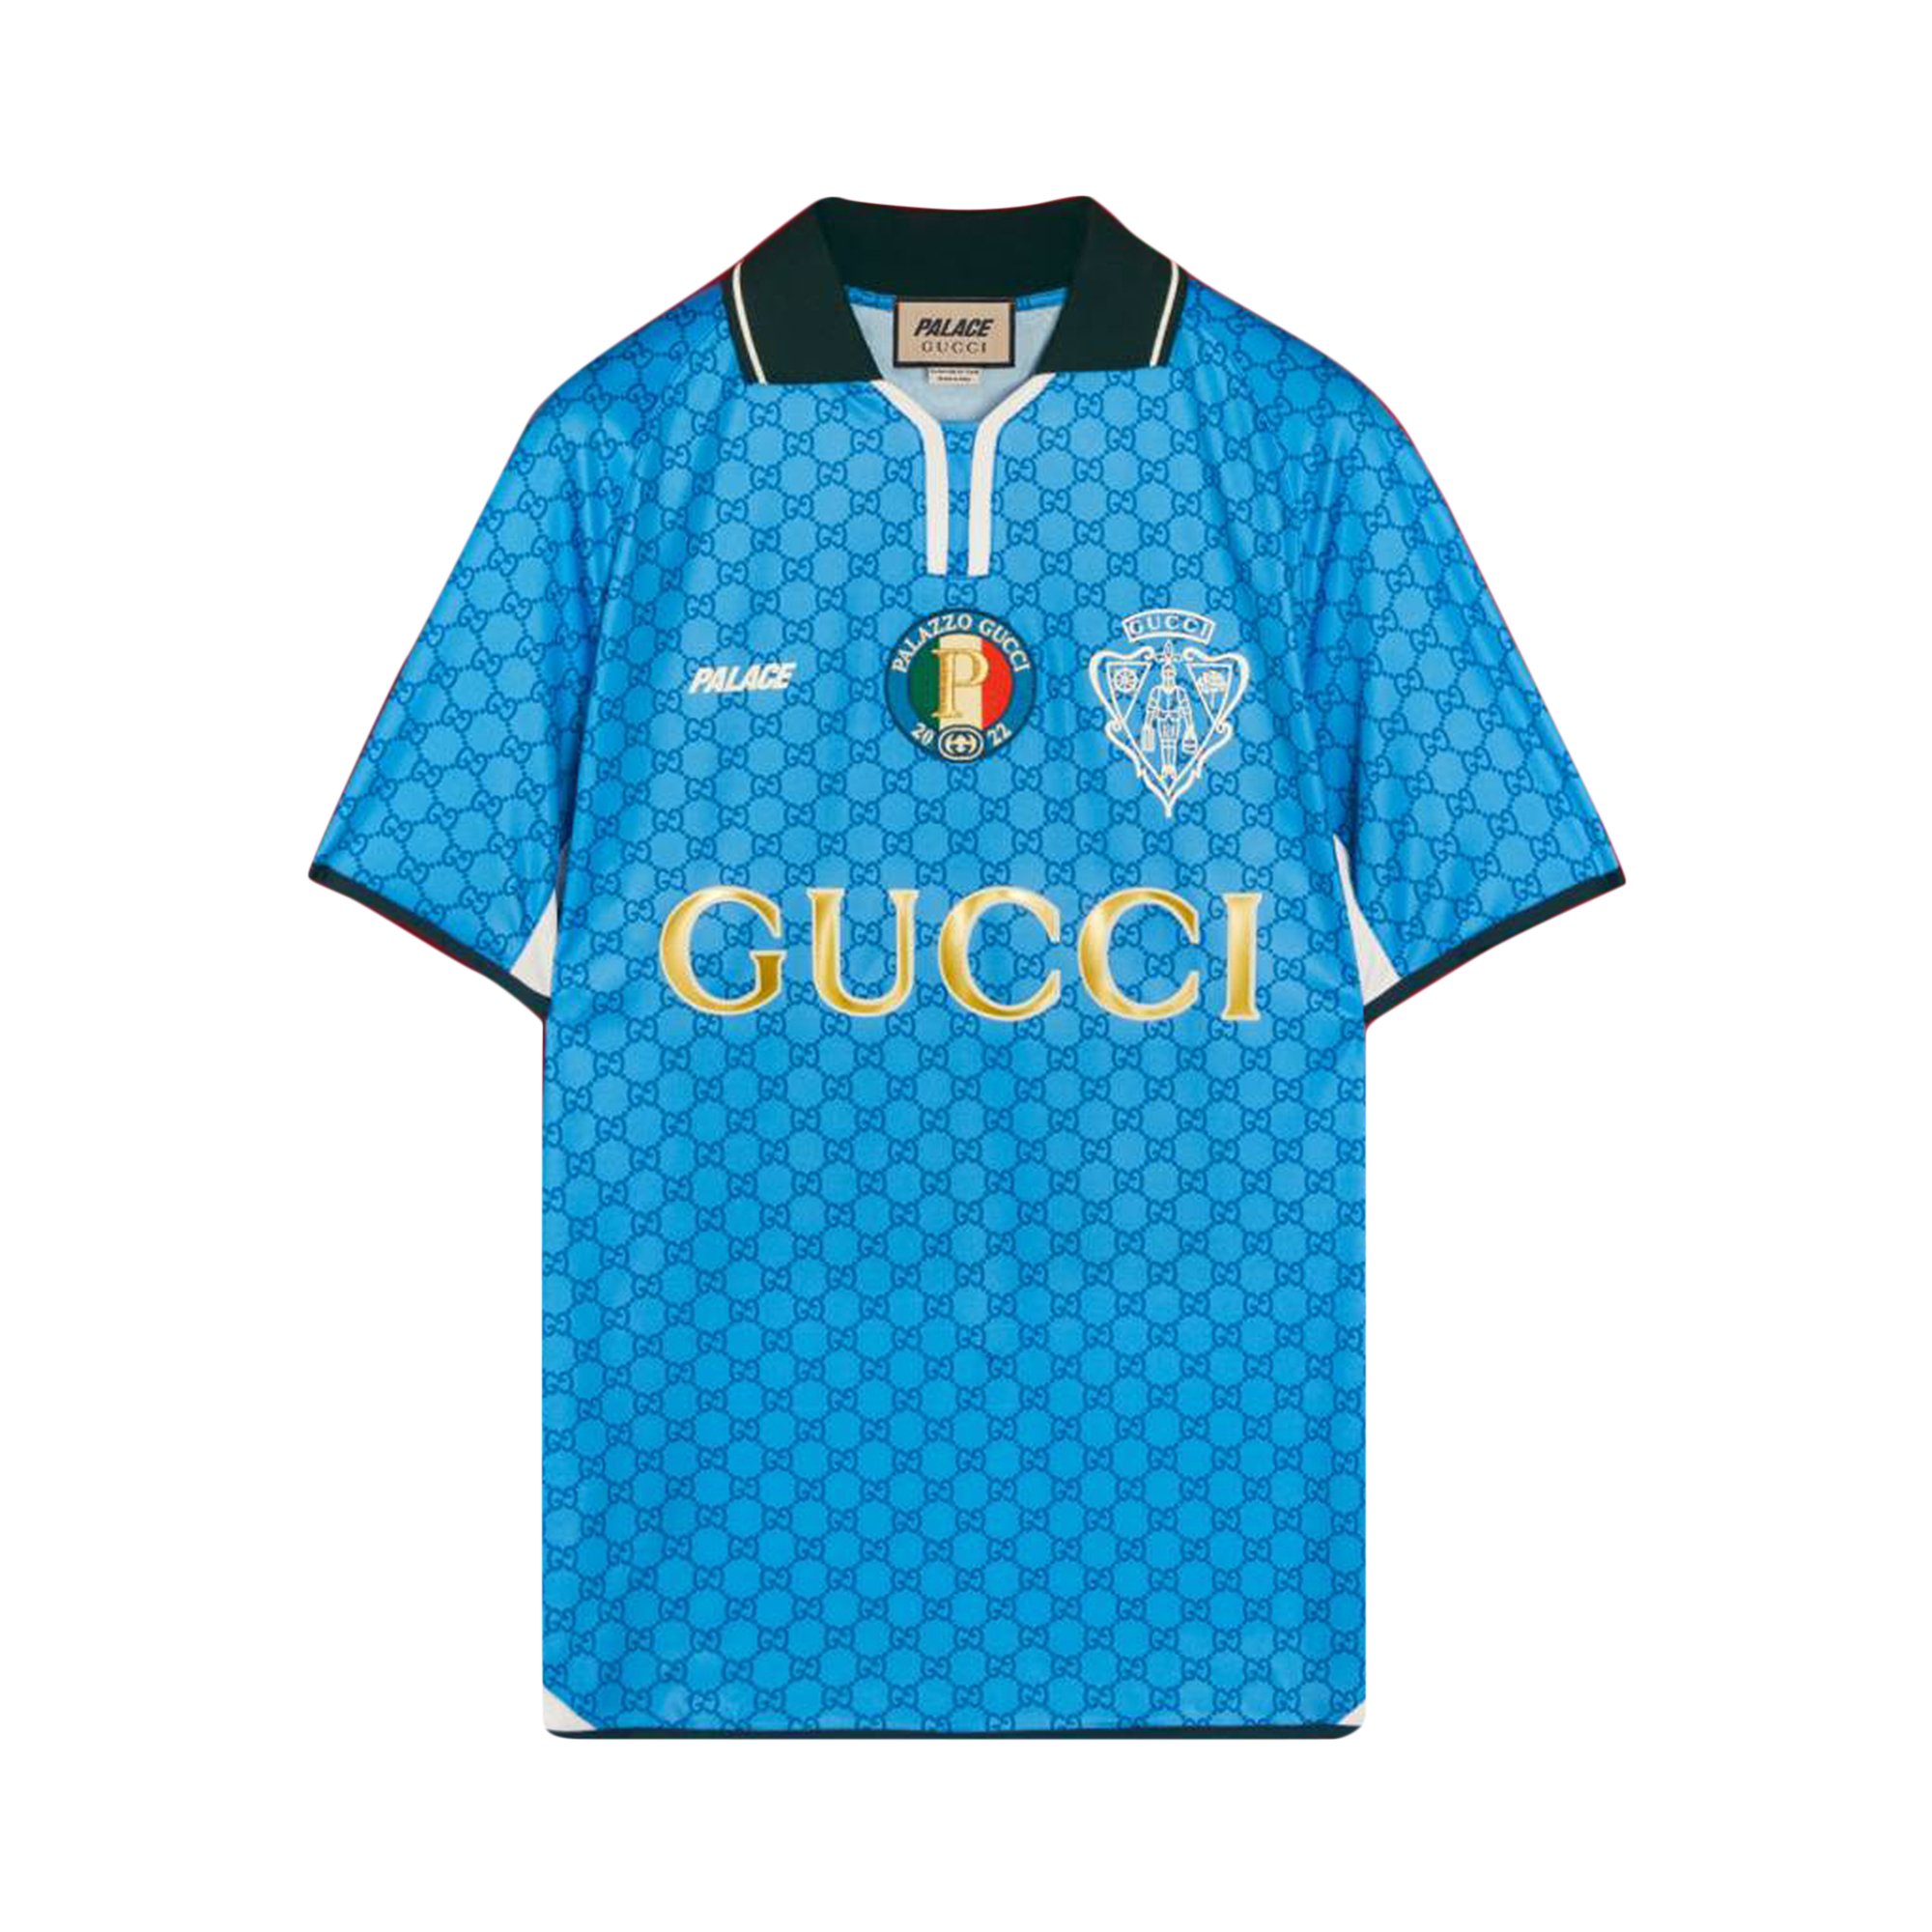 Gucci x Palace Printed Football Technical Jersey T-Shirt 'Blue'